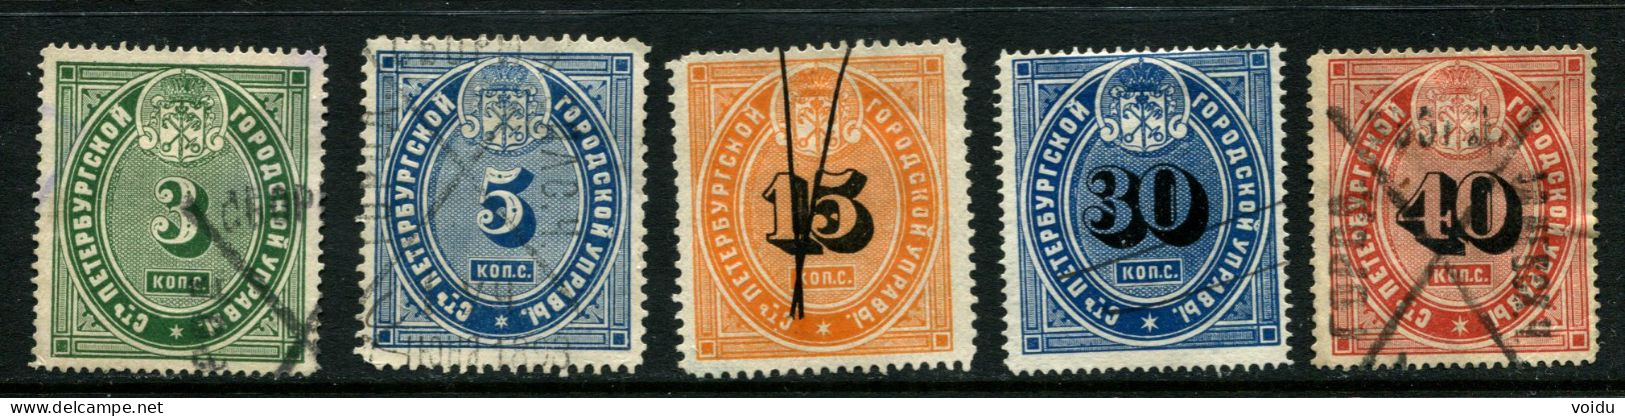 Russia Revenue Stamps - Revenue Stamps